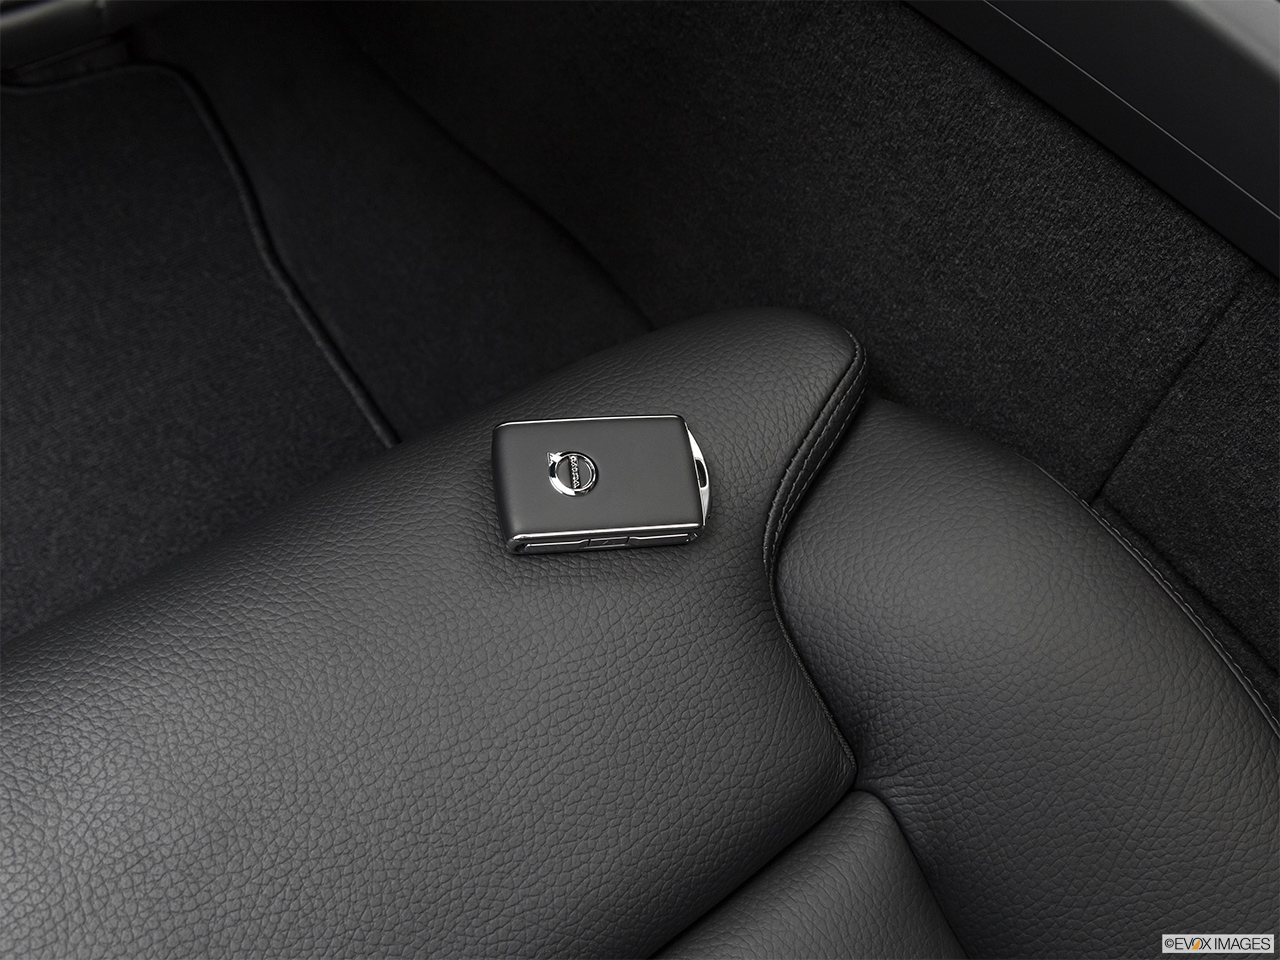 2019 Volvo XC60 T8 Inscription eAWD Plug-in Hybrid Key fob on driver's seat. 